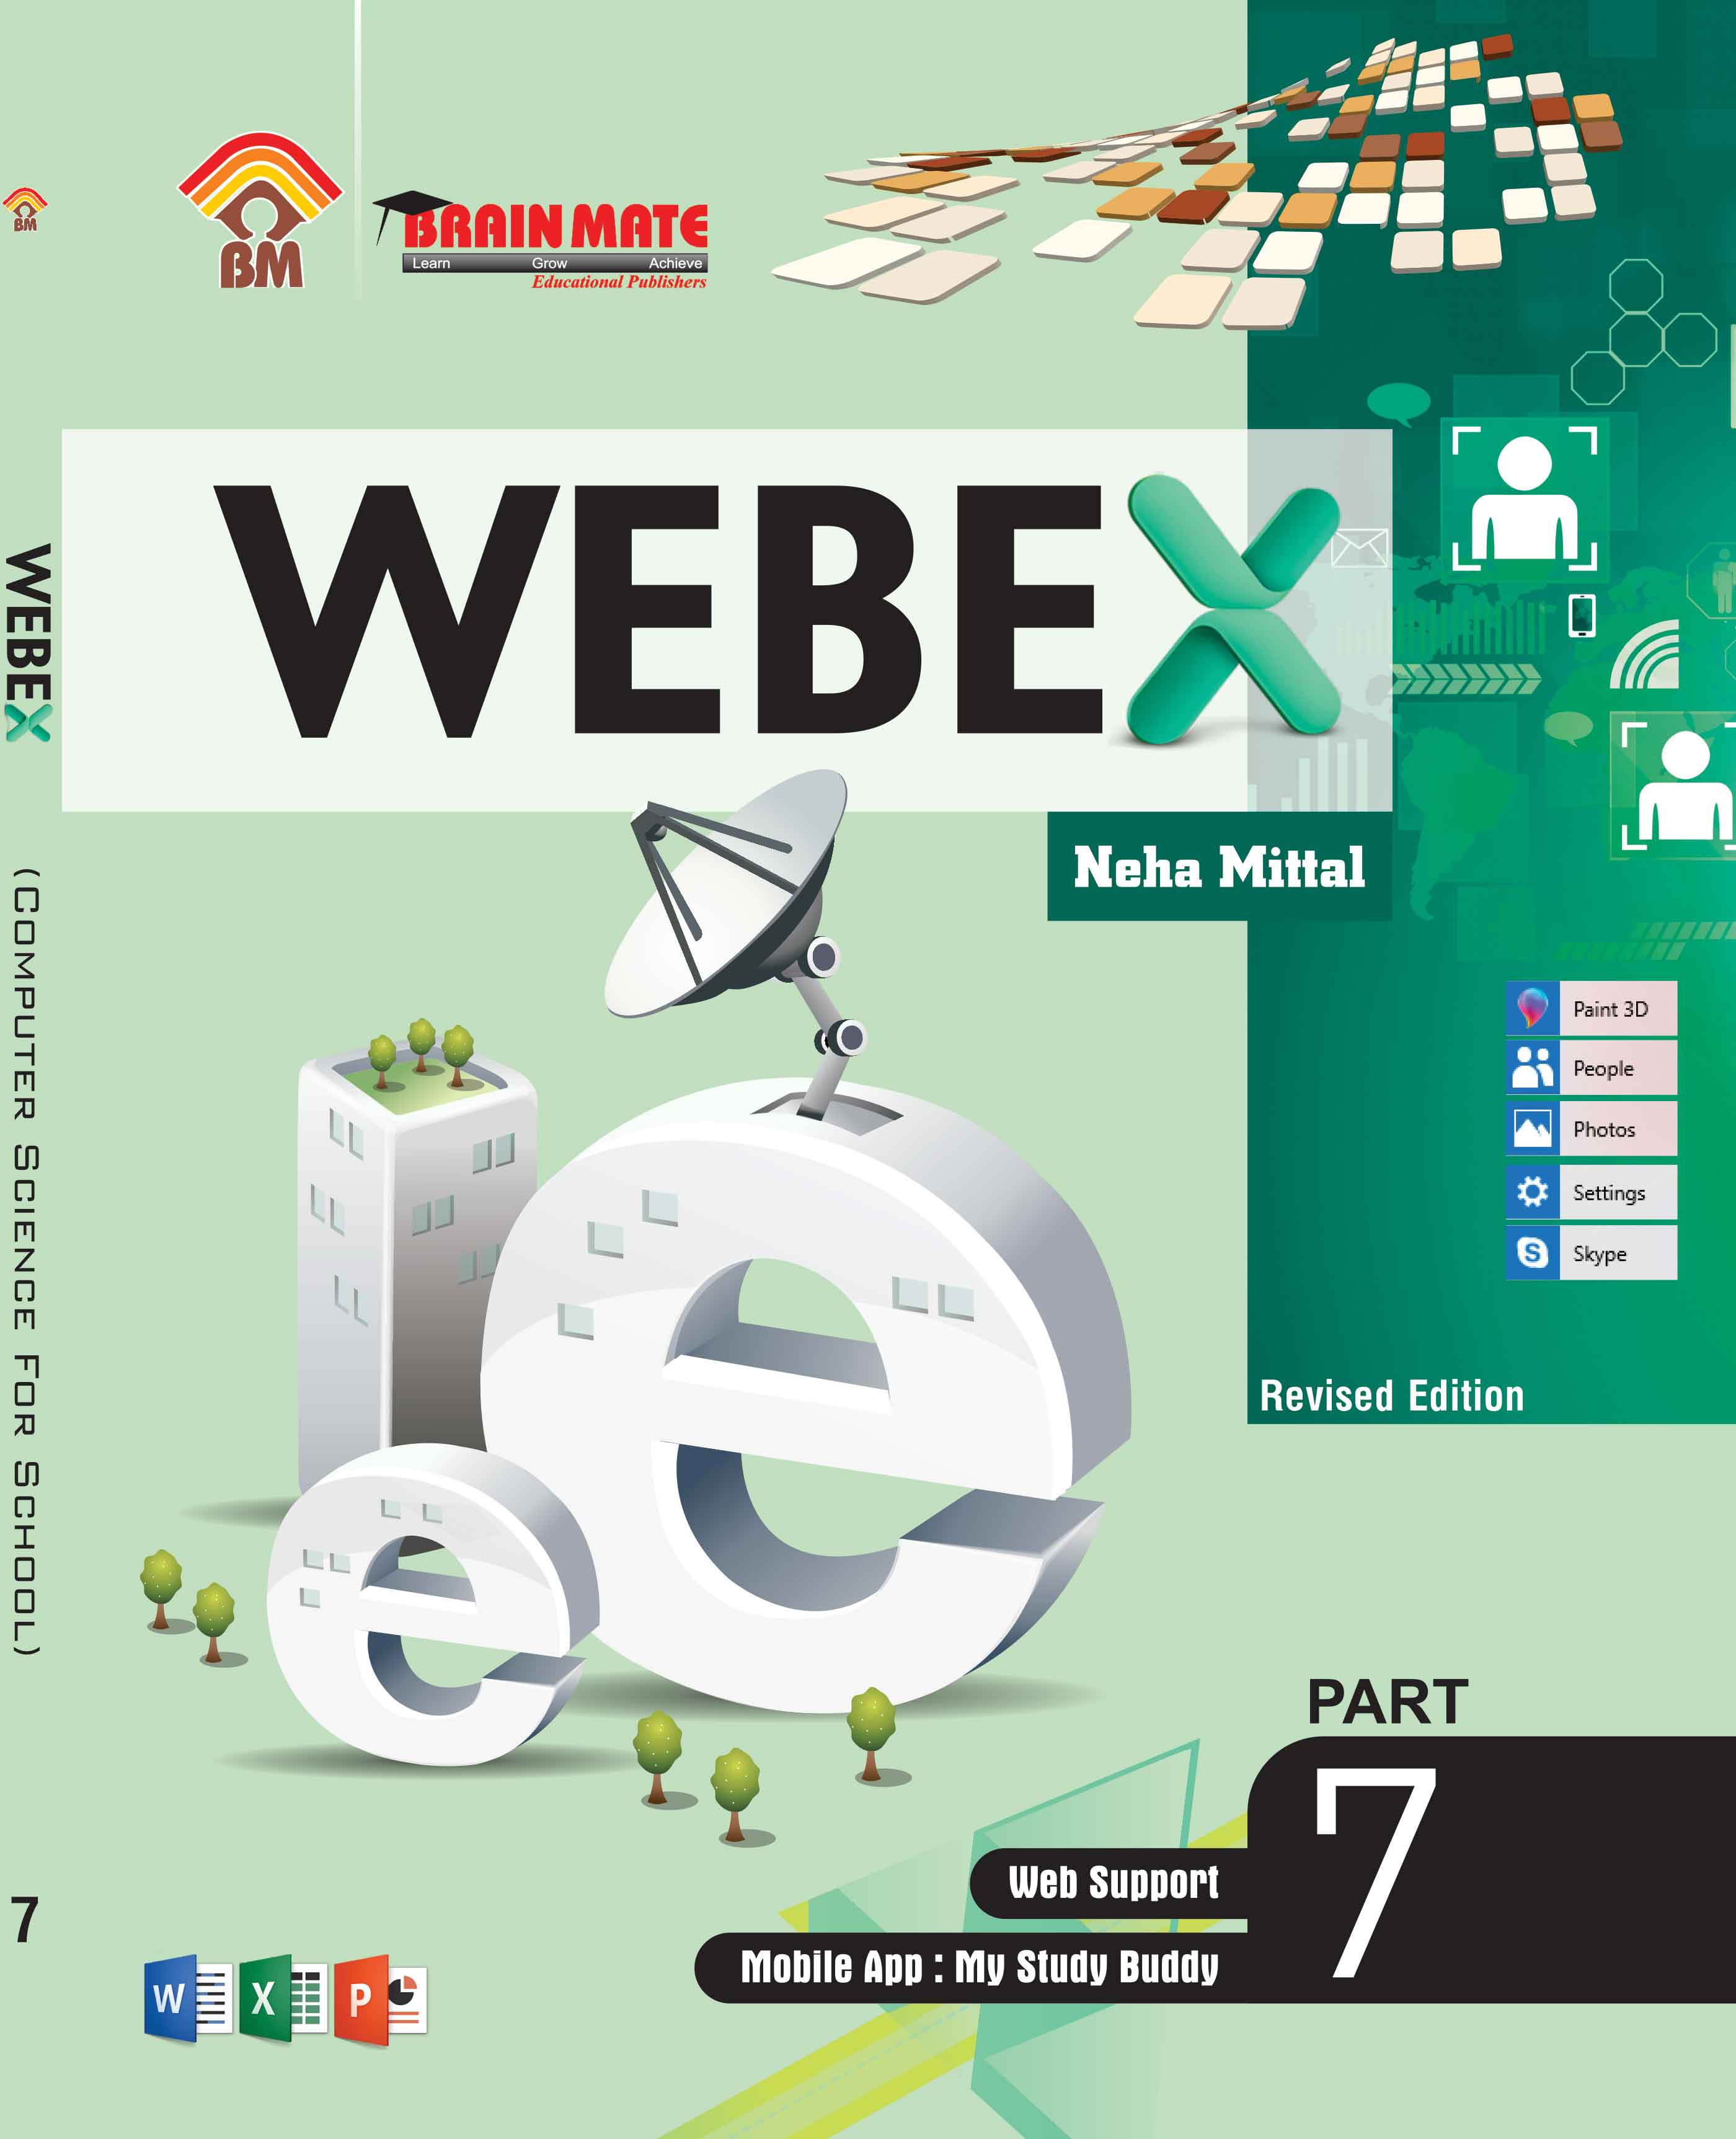 brainmate of Webex-7